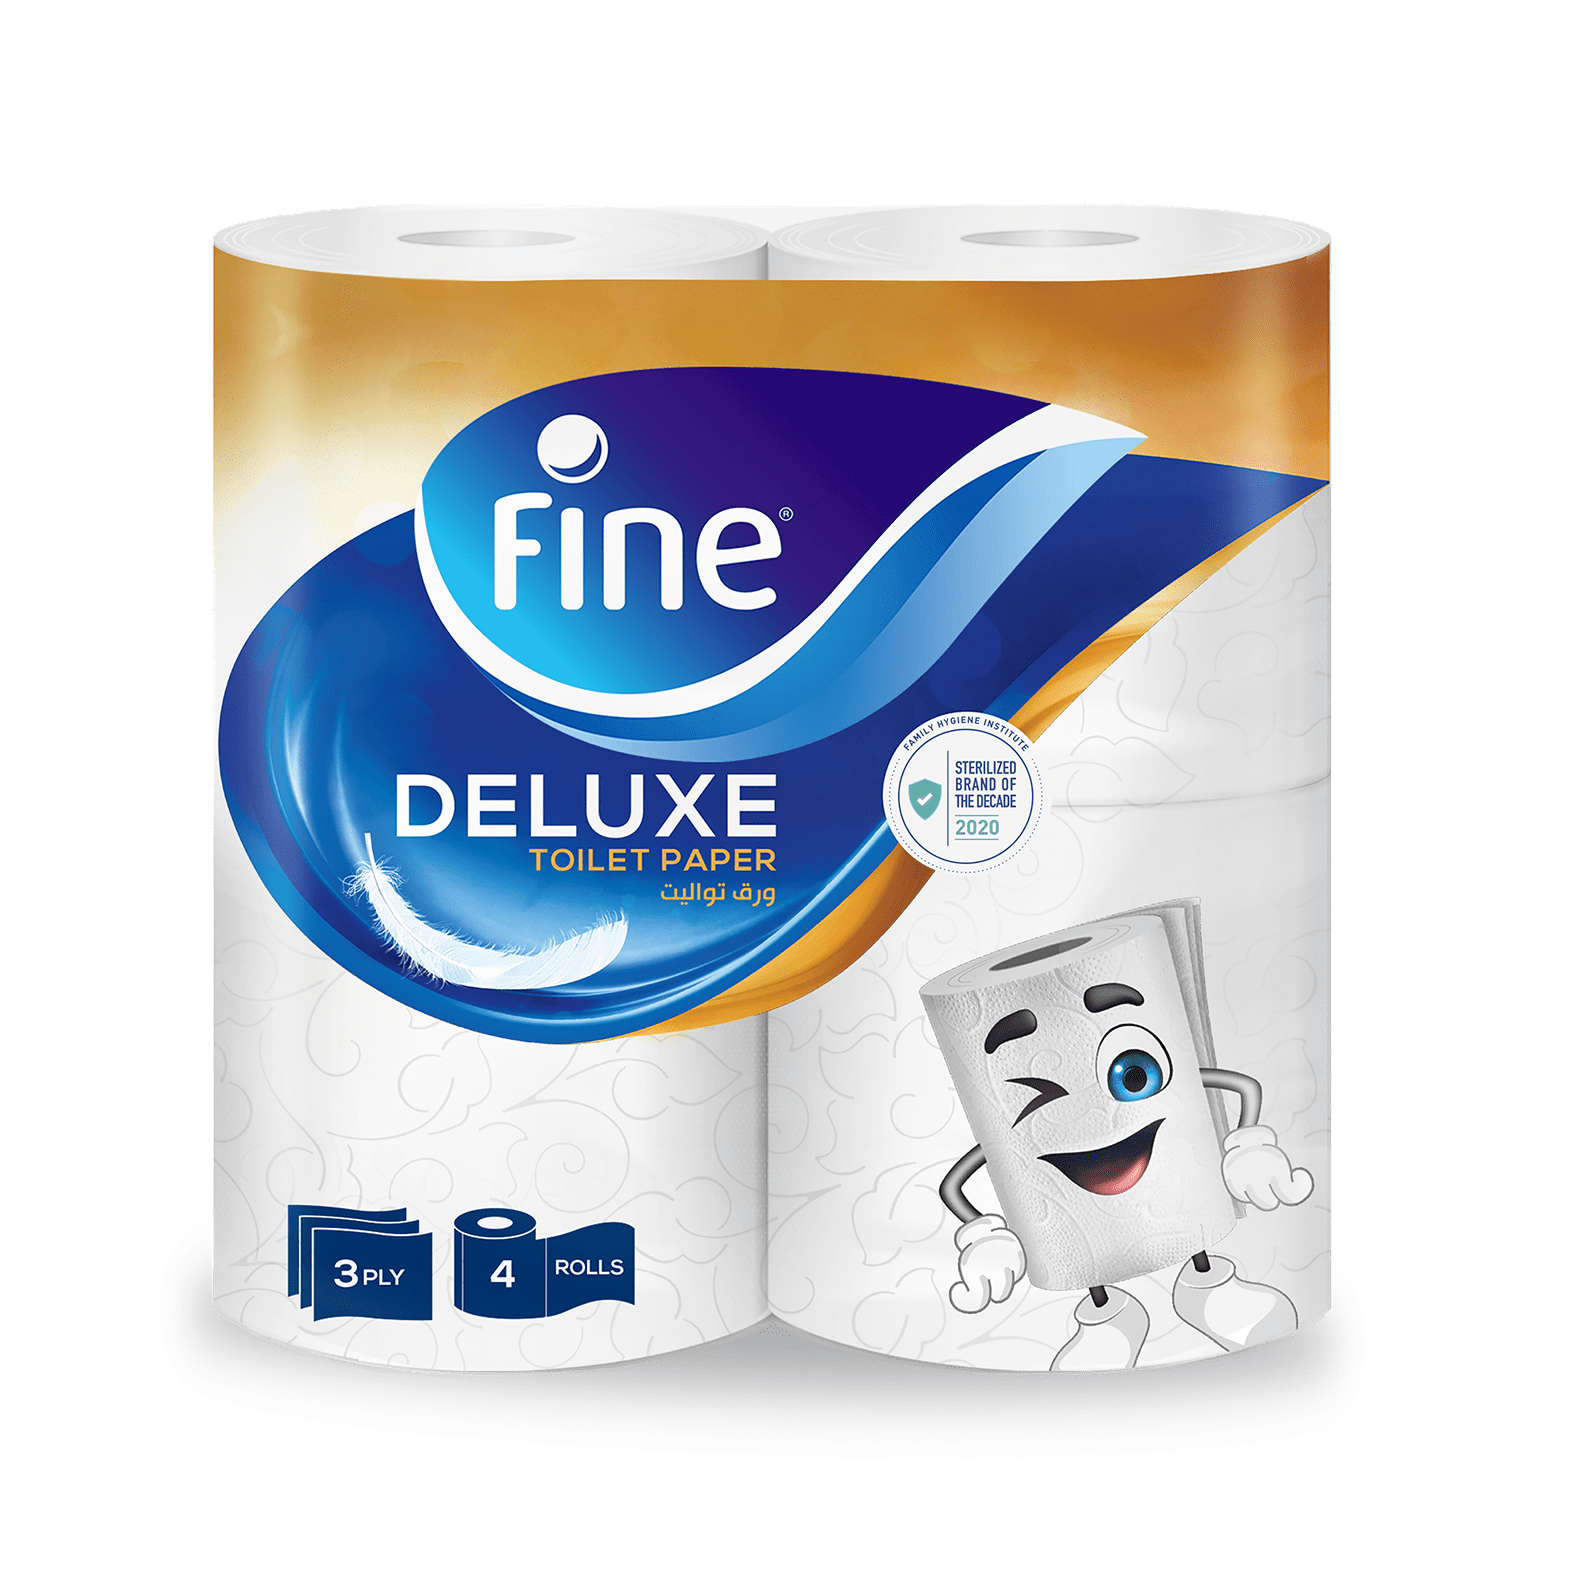 Fine Deluxe Toilet Roll Image